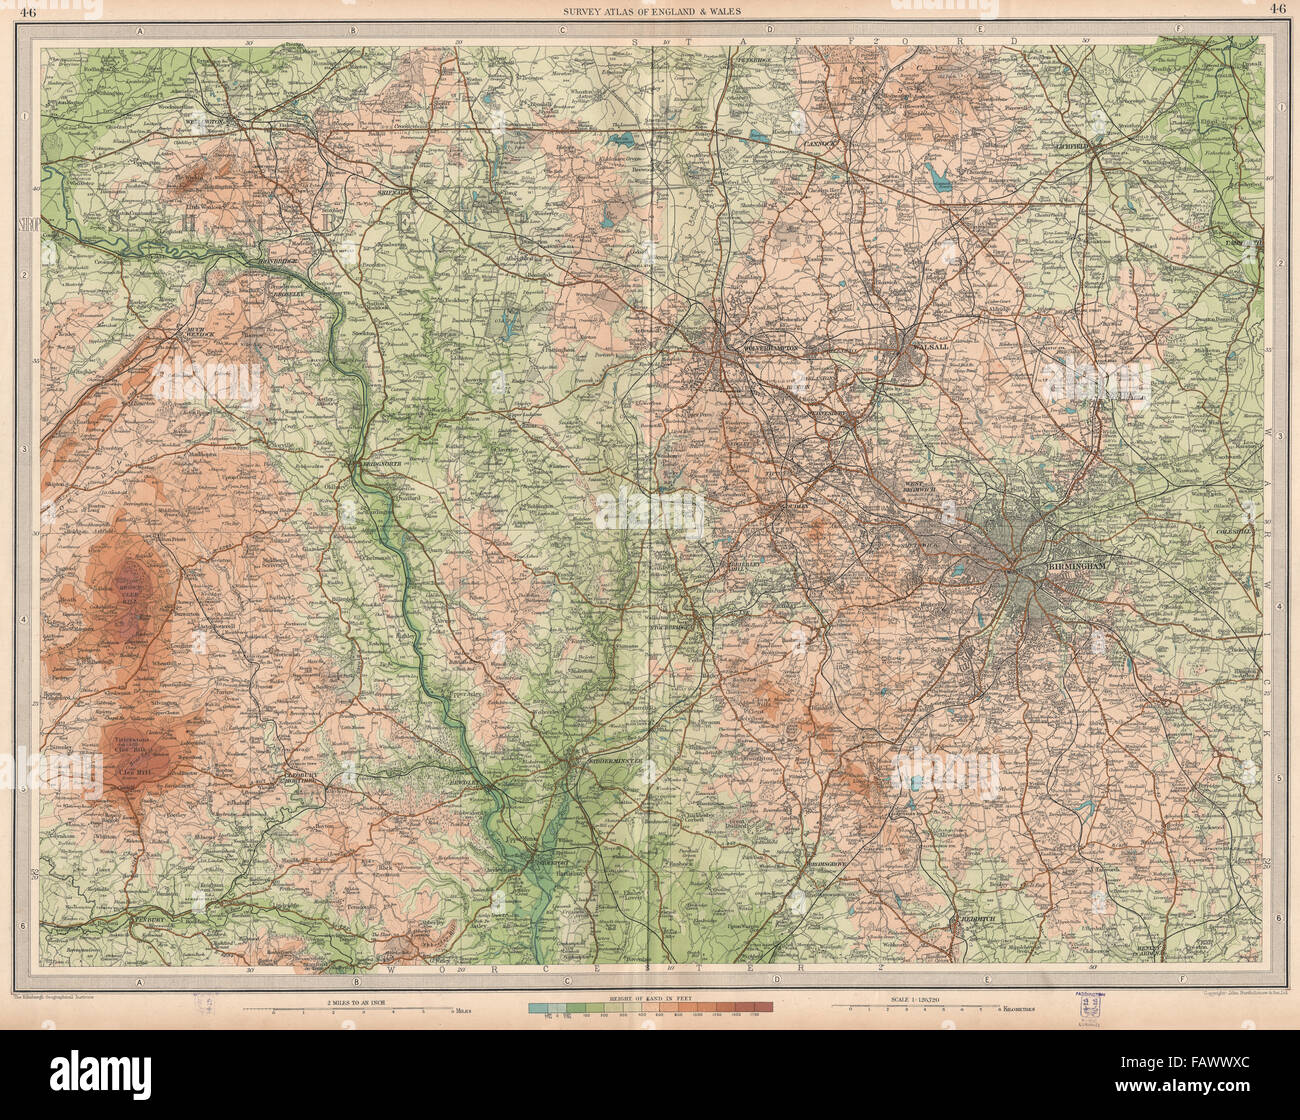 W MIDLANDS/SEVERN VALLEY: Birmingham Shropshire Hills Wolverhampton, 1939 map Stock Photo